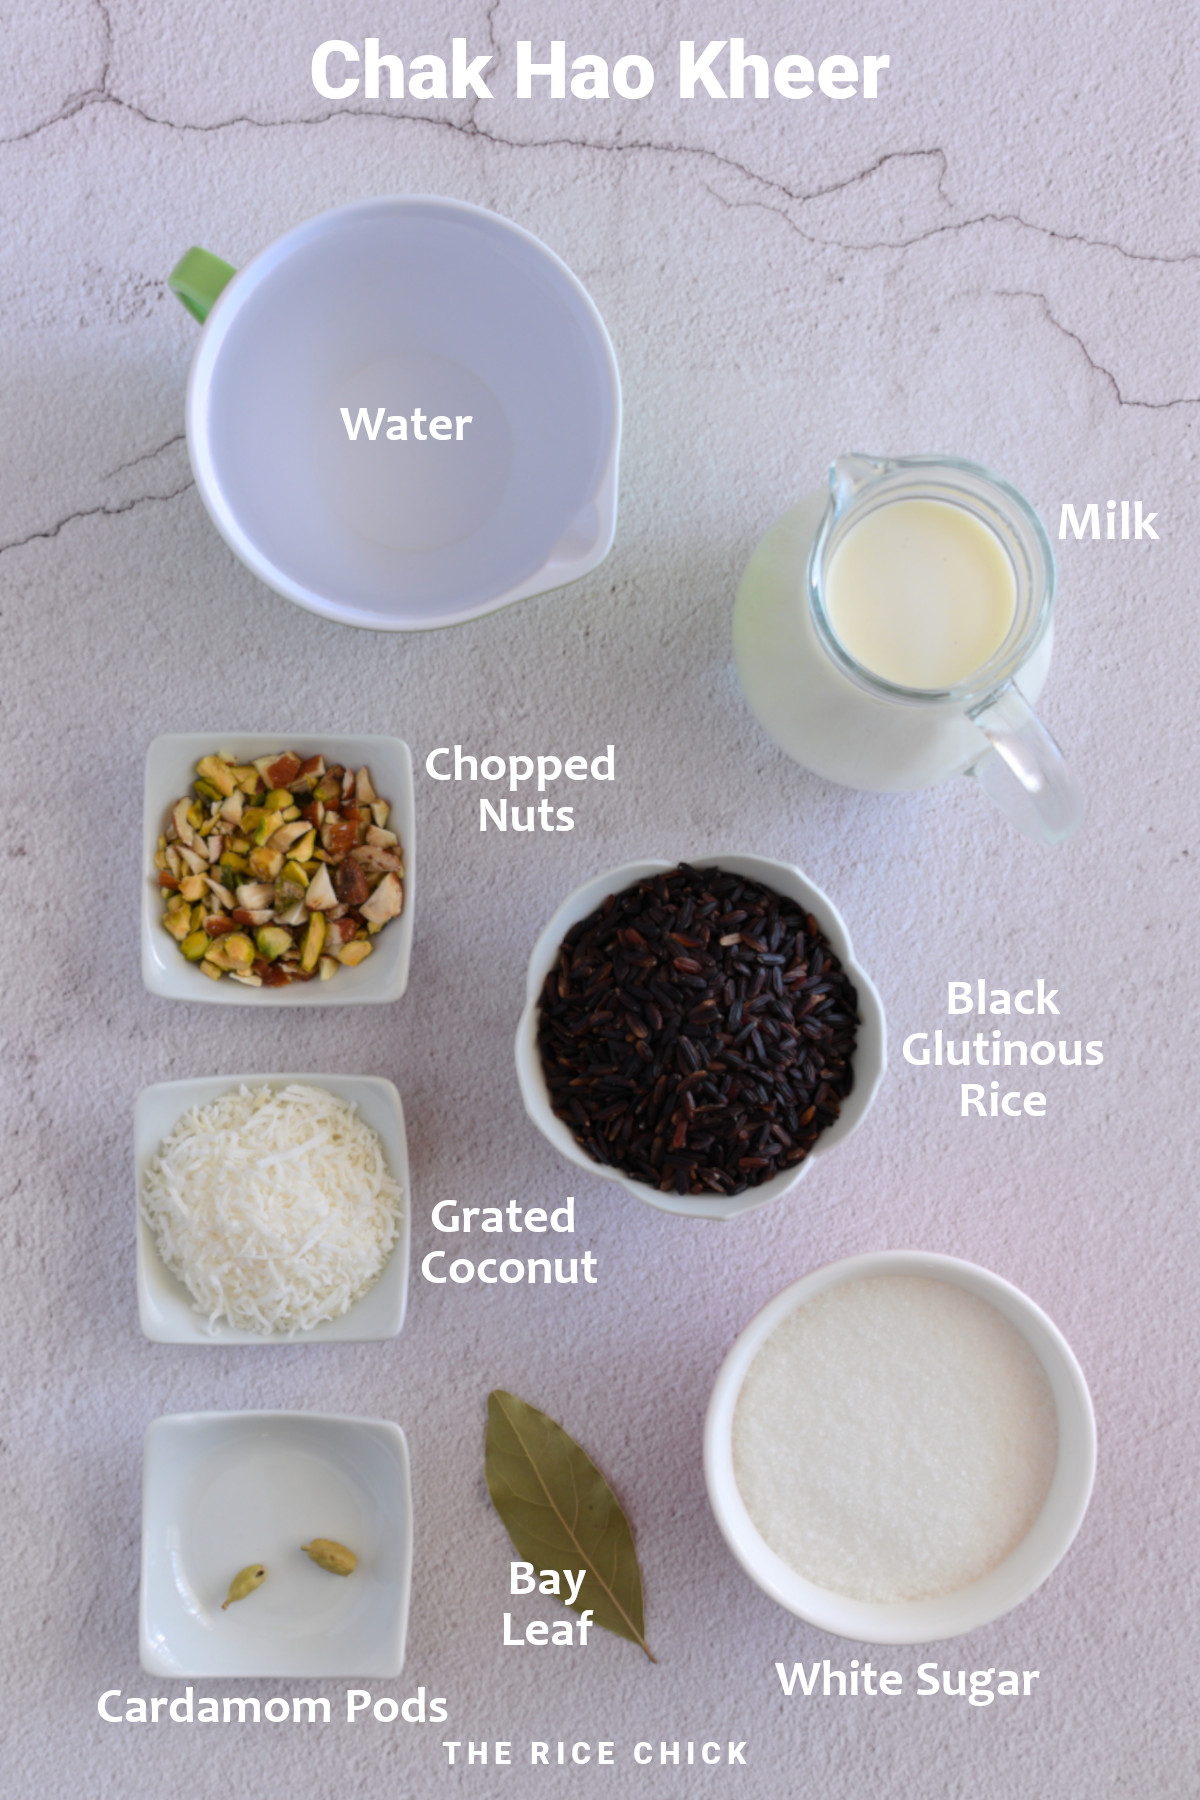 Ingredients for chak hao kheer.